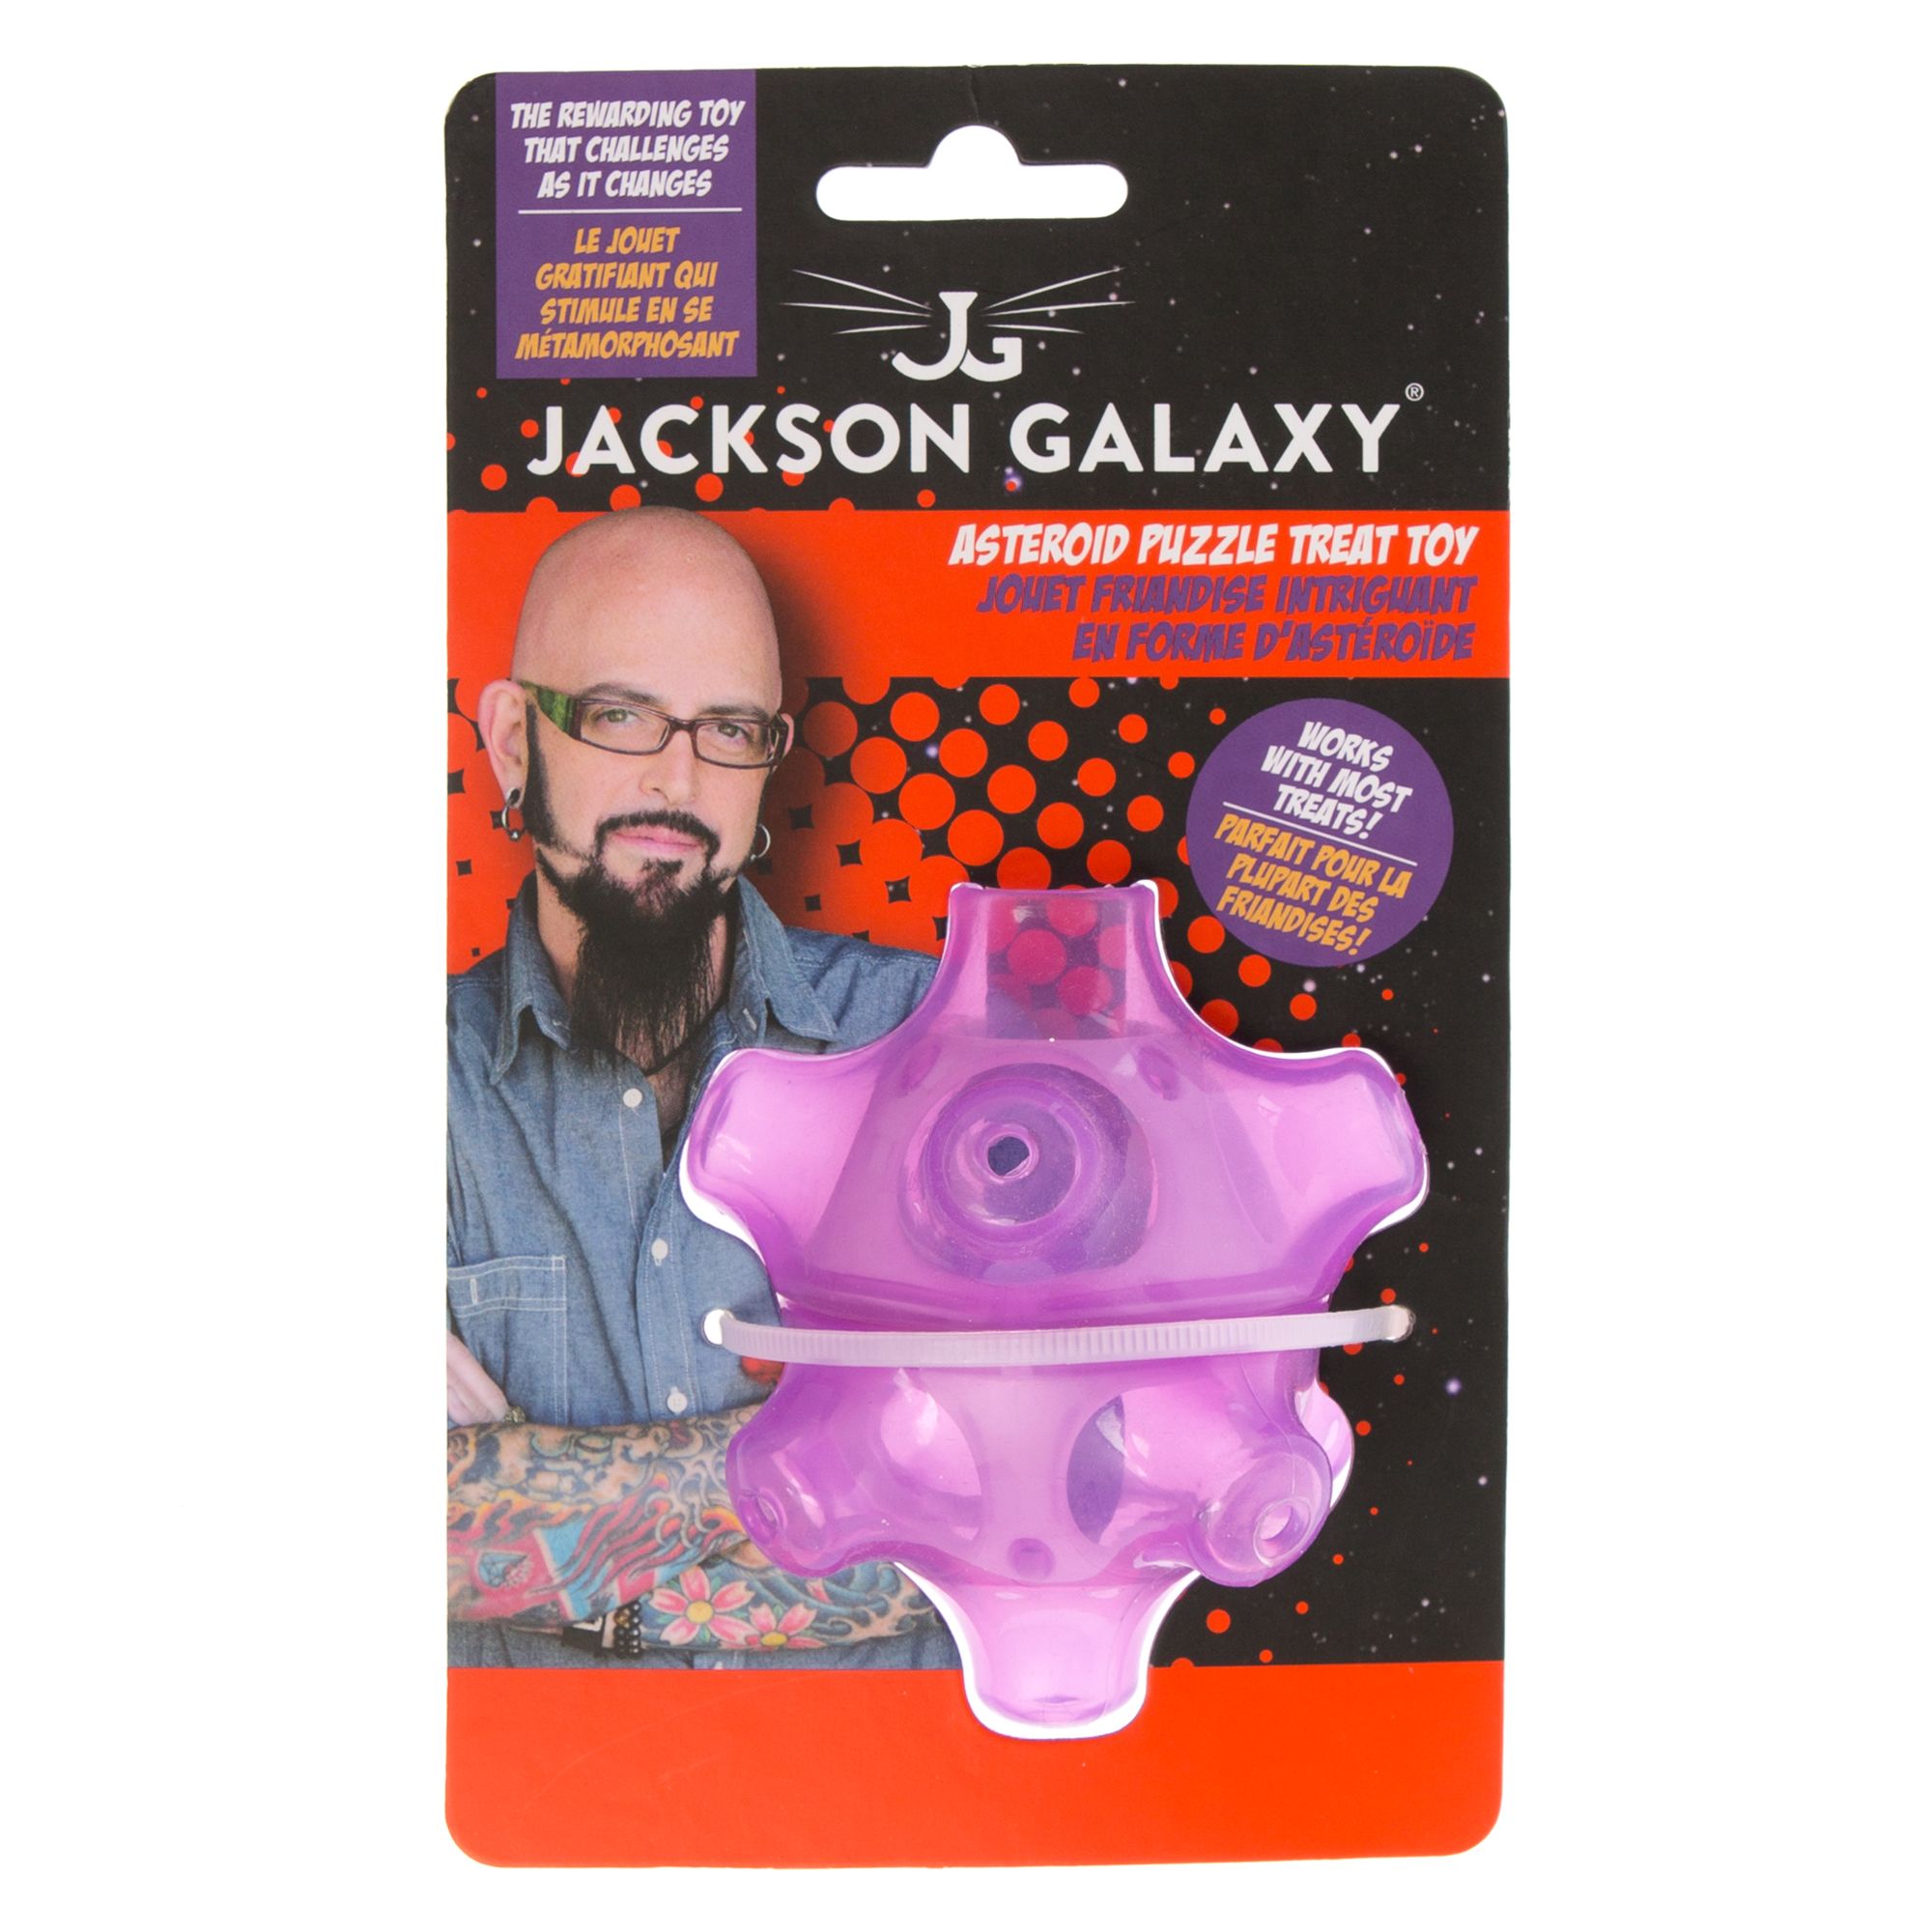 jackson galaxy asteroid puzzle treat toy